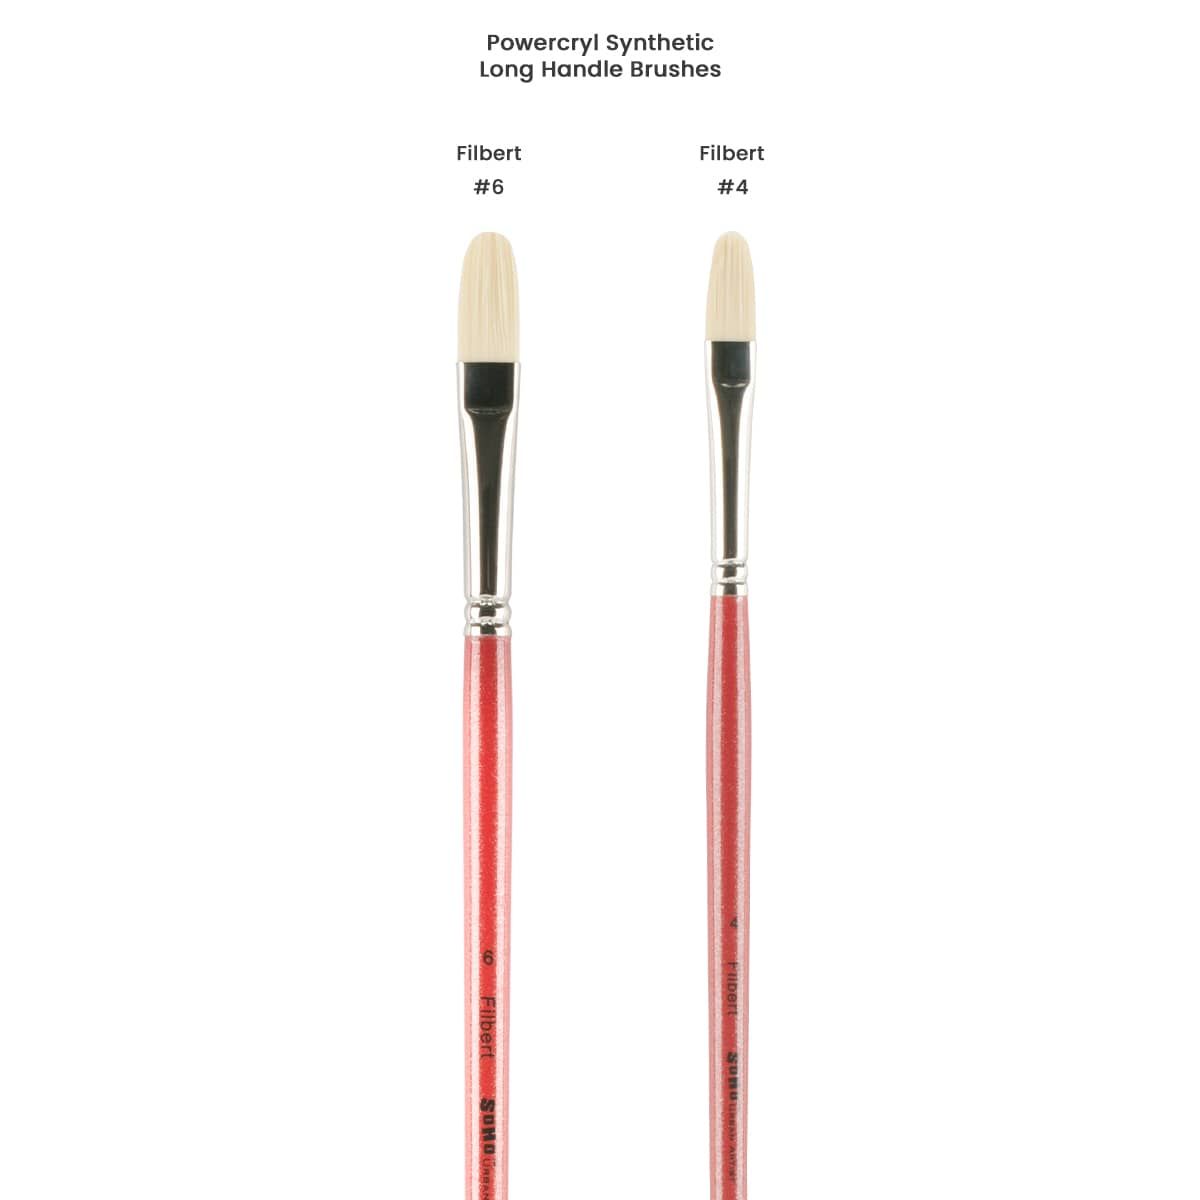 Powercryl Synthetic Long Handle Brushes